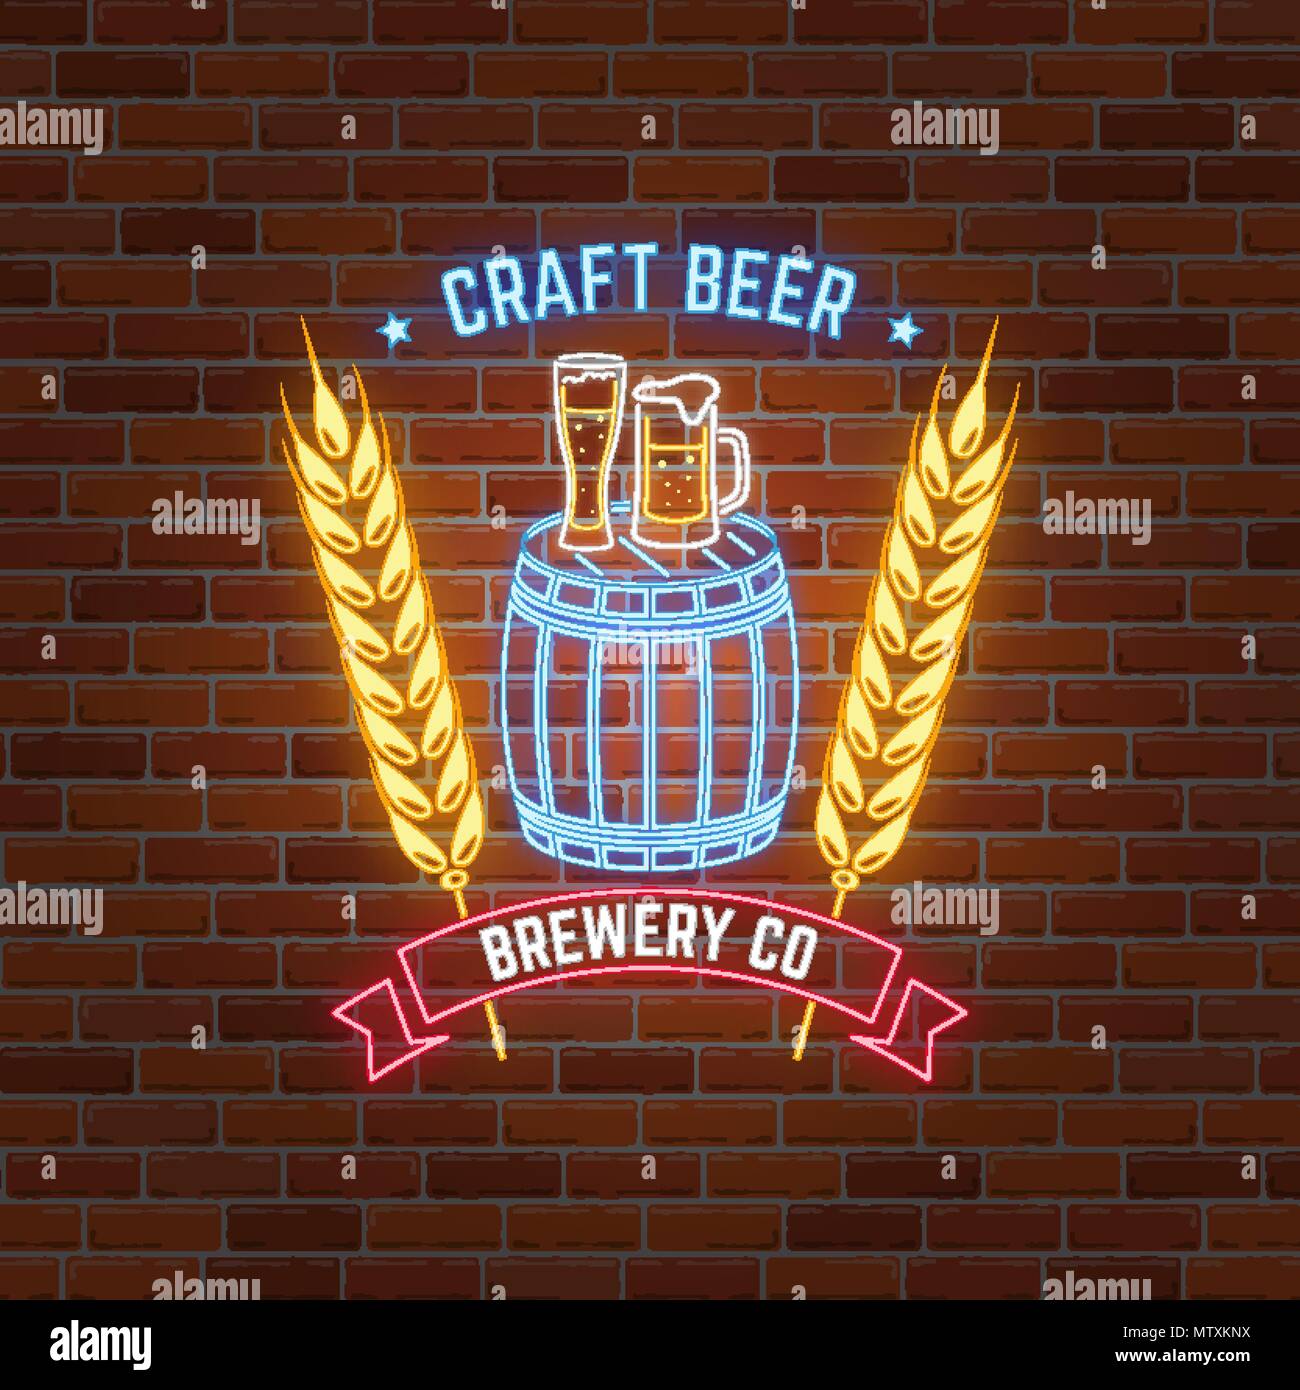 Retro neon Beer Bar sign on brick wall background. Vector illustration. Neon design for bar, pub or restaurant business. Craft beer. Stock Vector